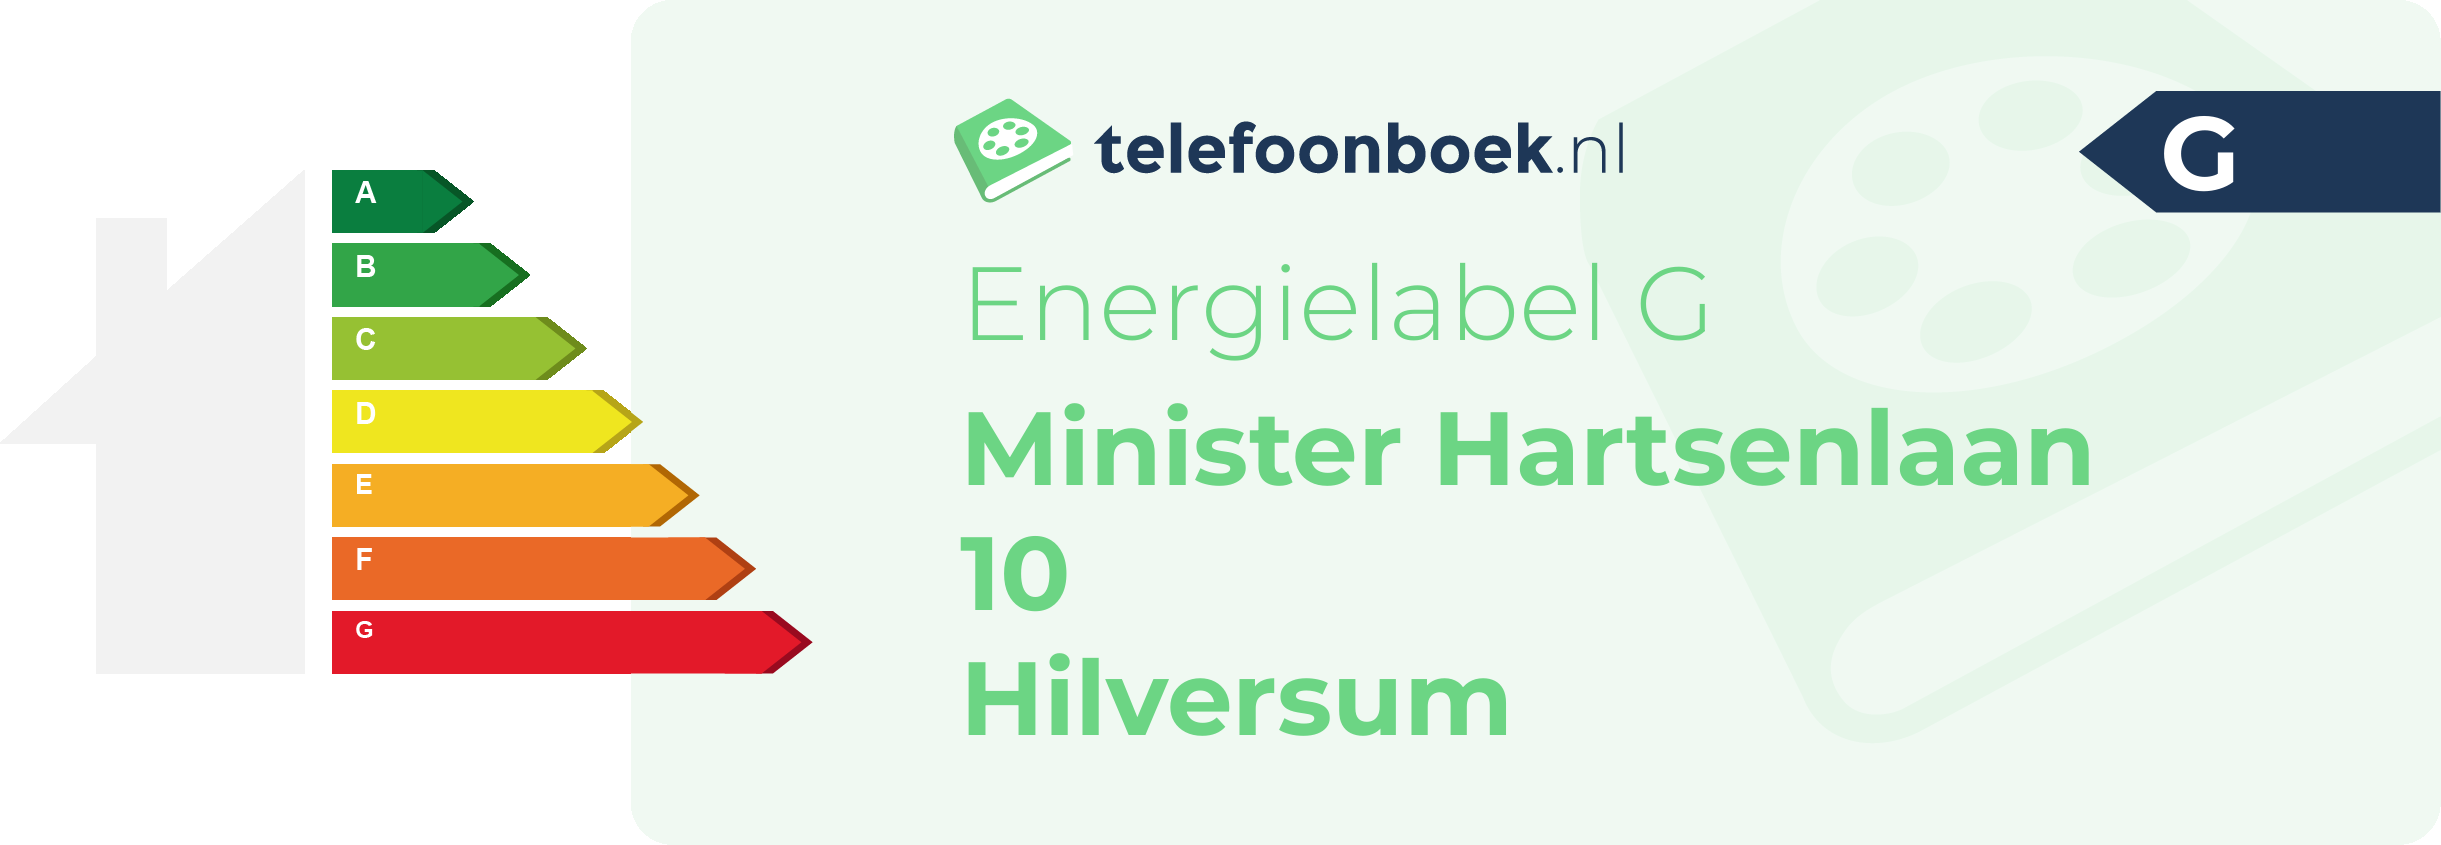 Energielabel Minister Hartsenlaan 10 Hilversum